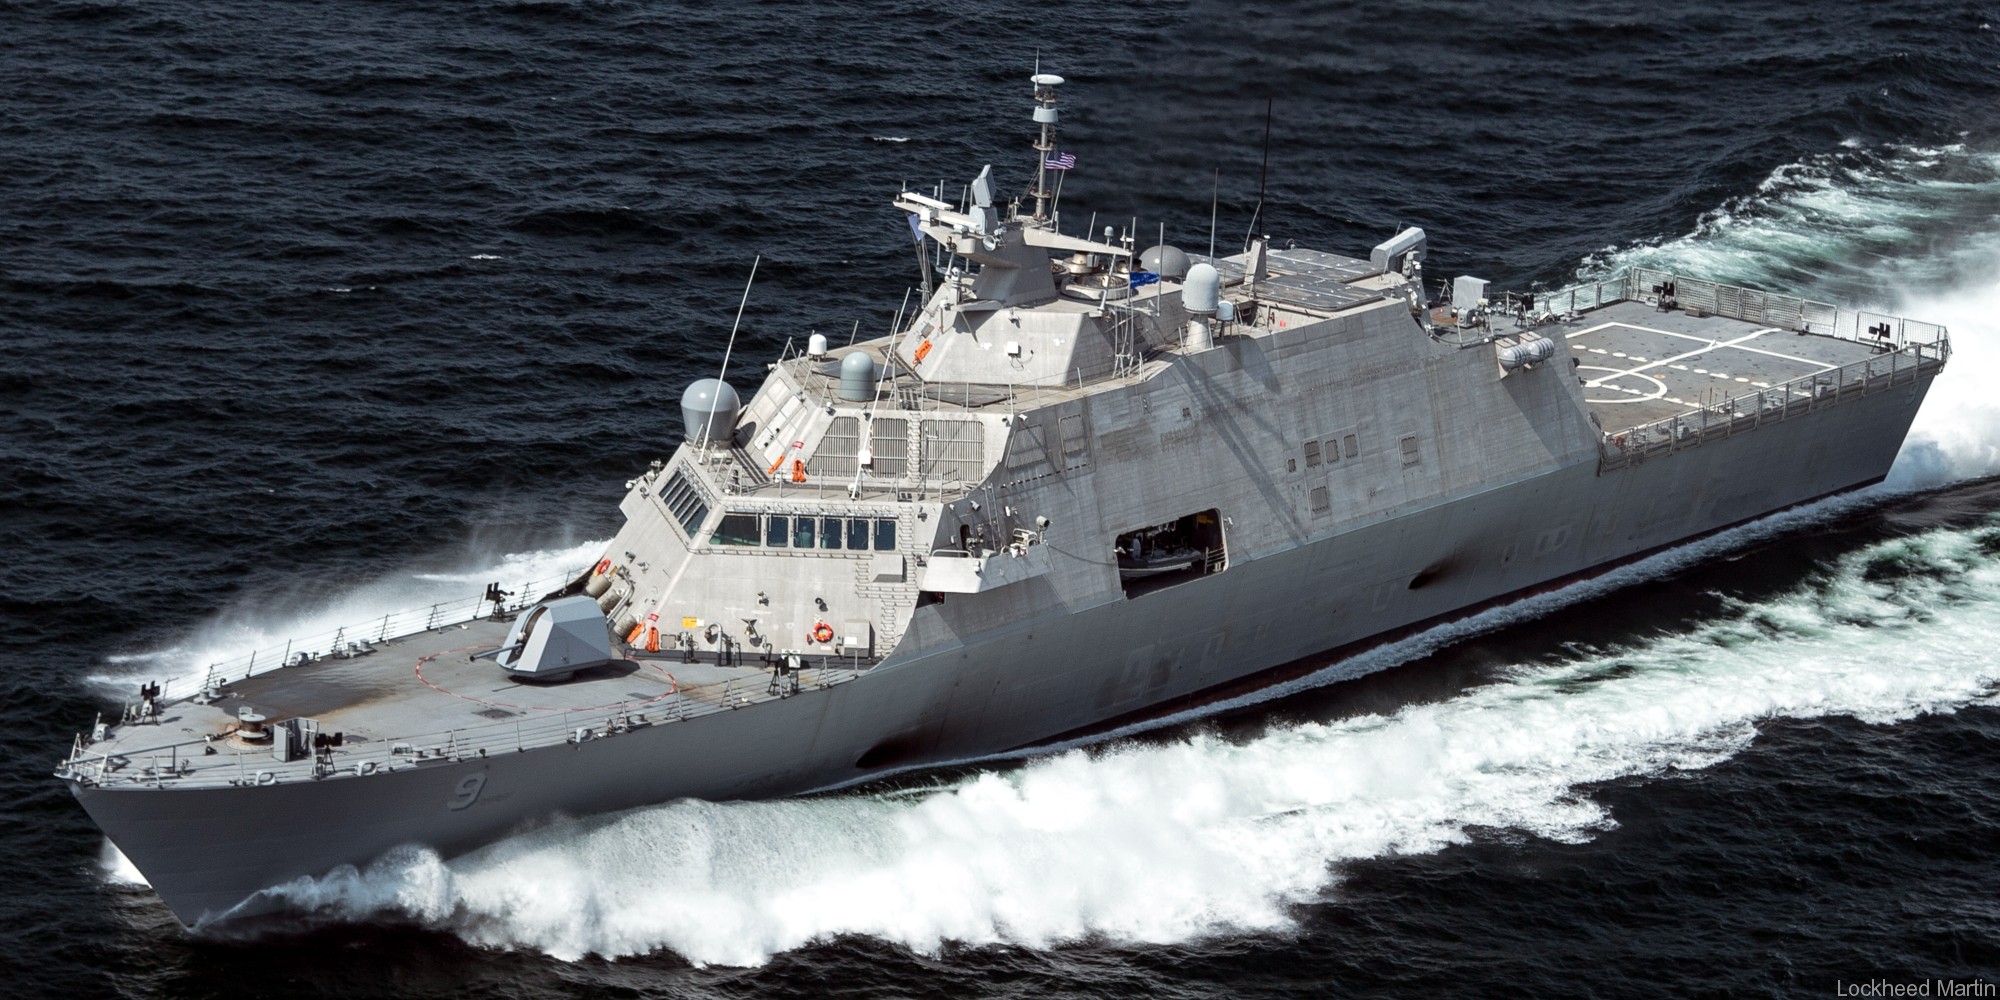 lcs-9 uss little rock freedom class littoral combat ship us navy 18 acceptance trials lockheed martin